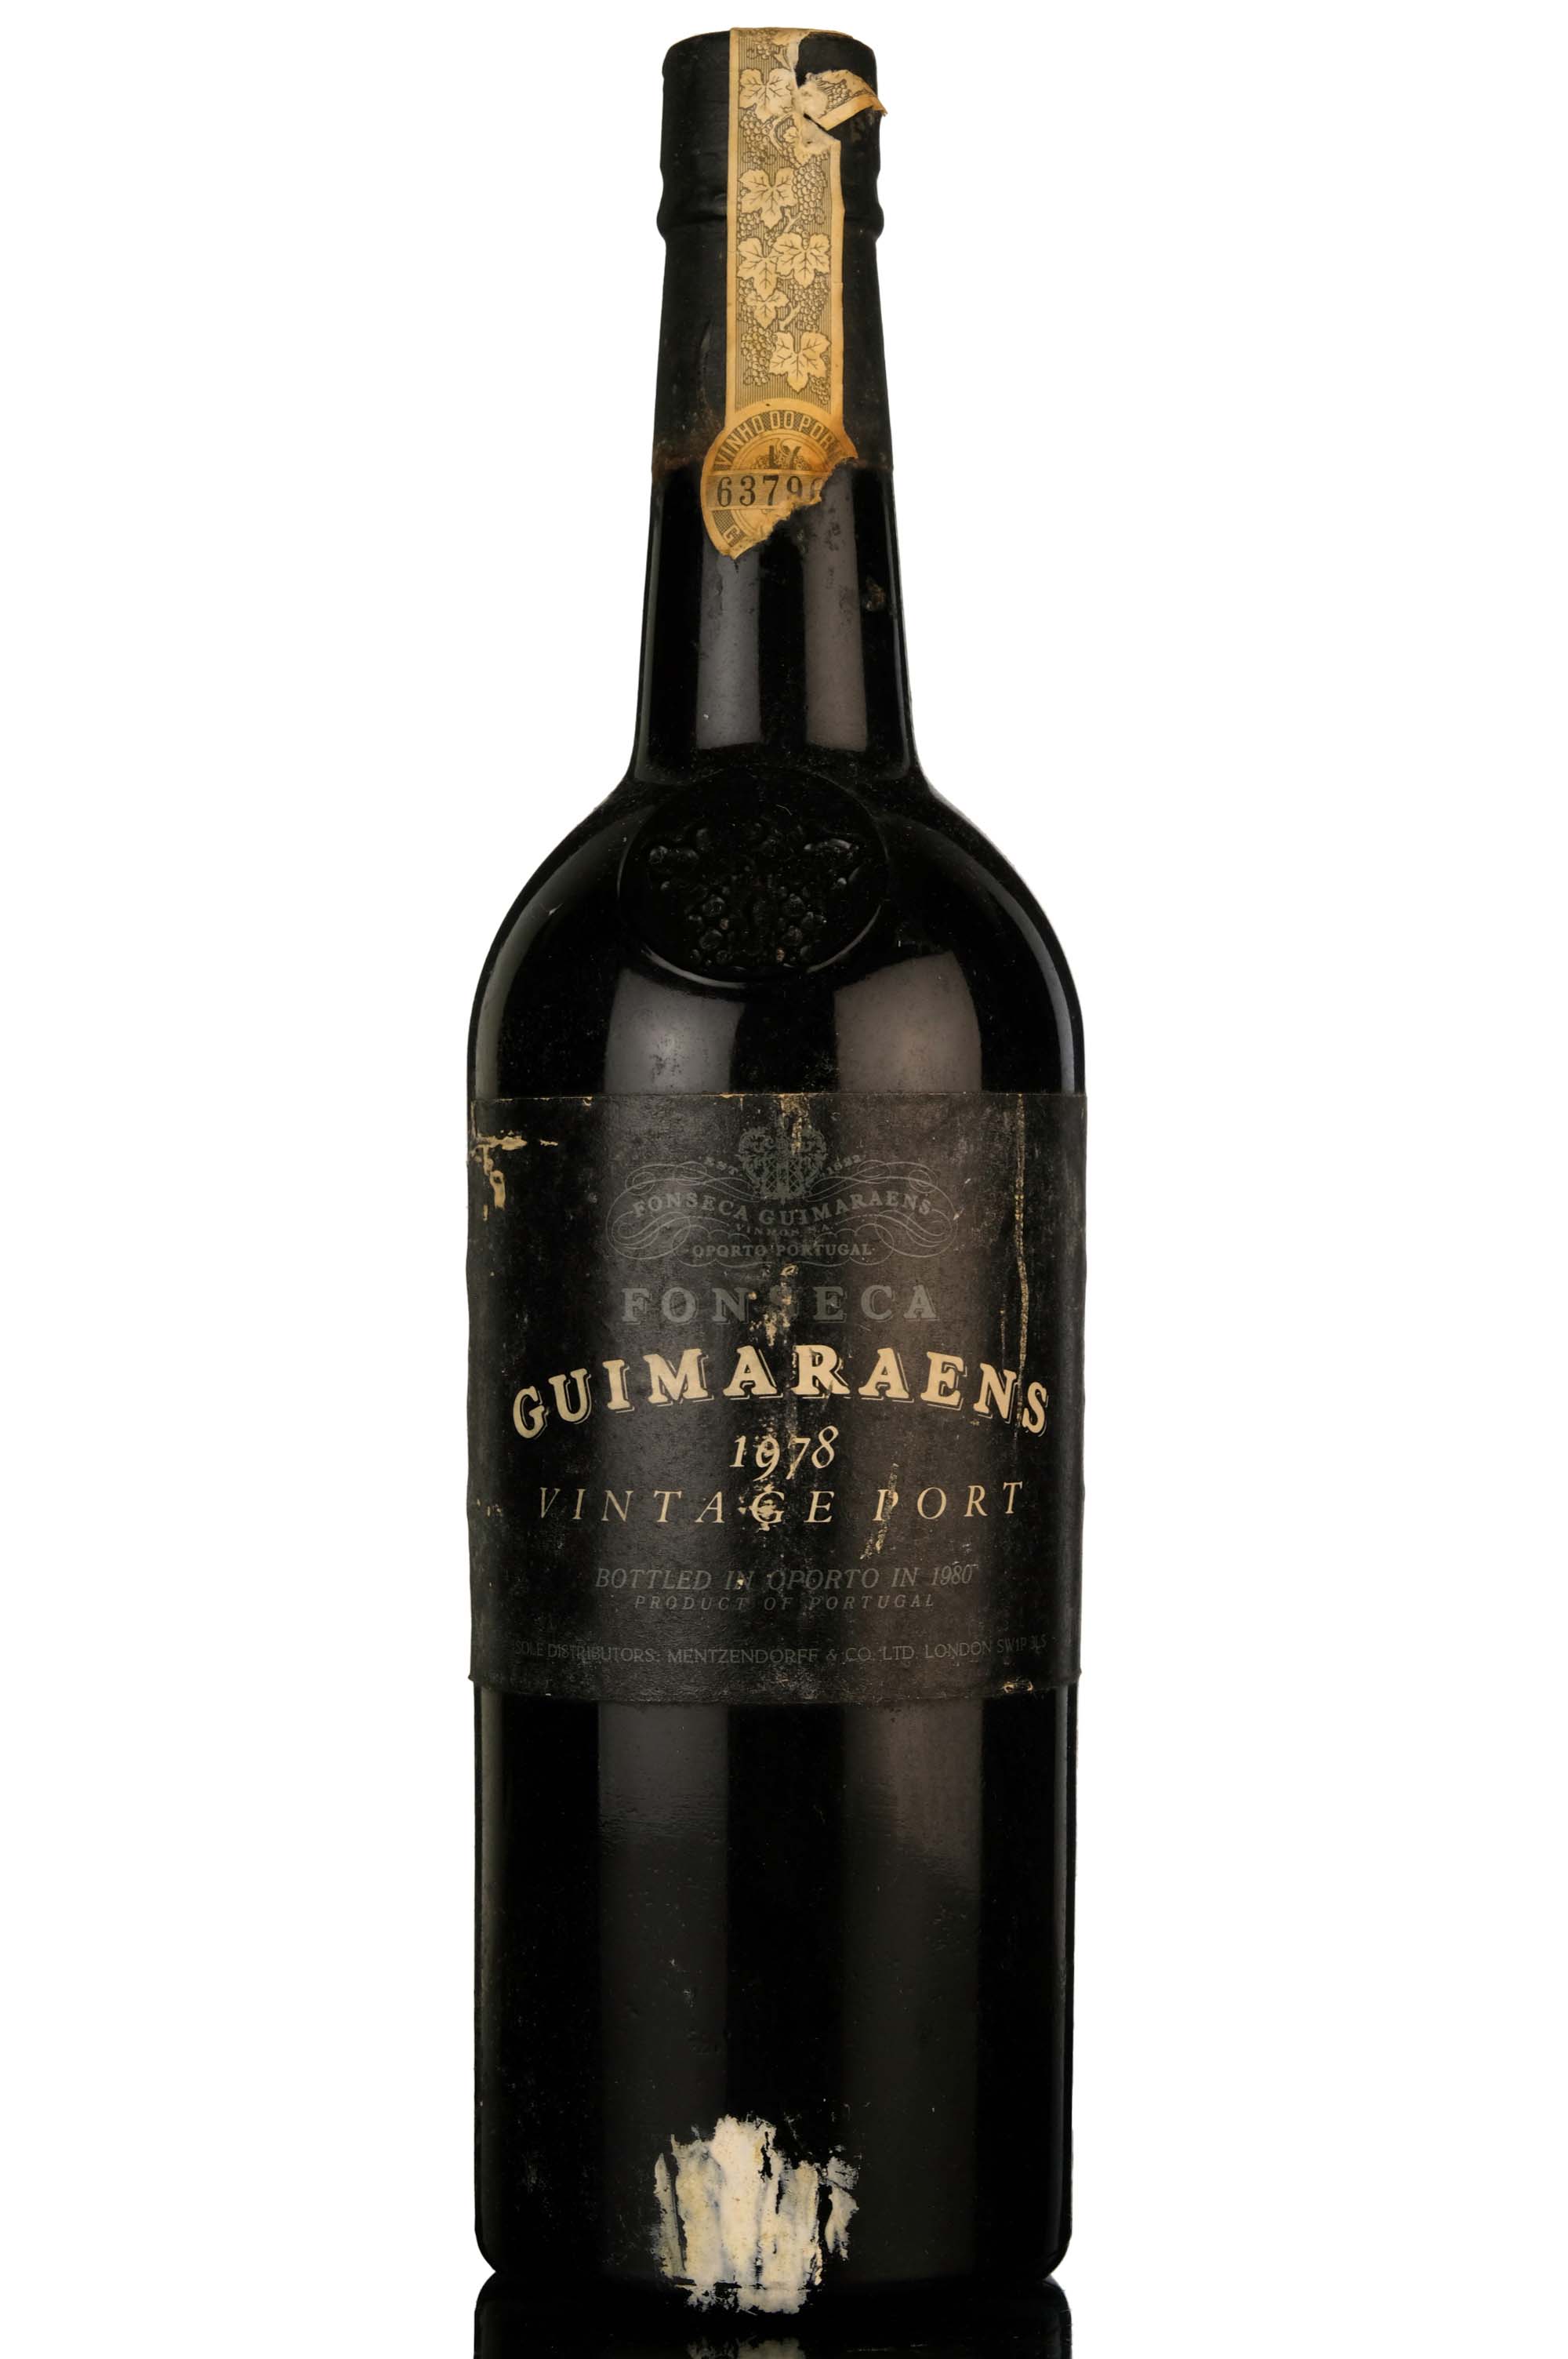 Fonseca Guimaraens 1978 Vintage Port - Bottled 1980